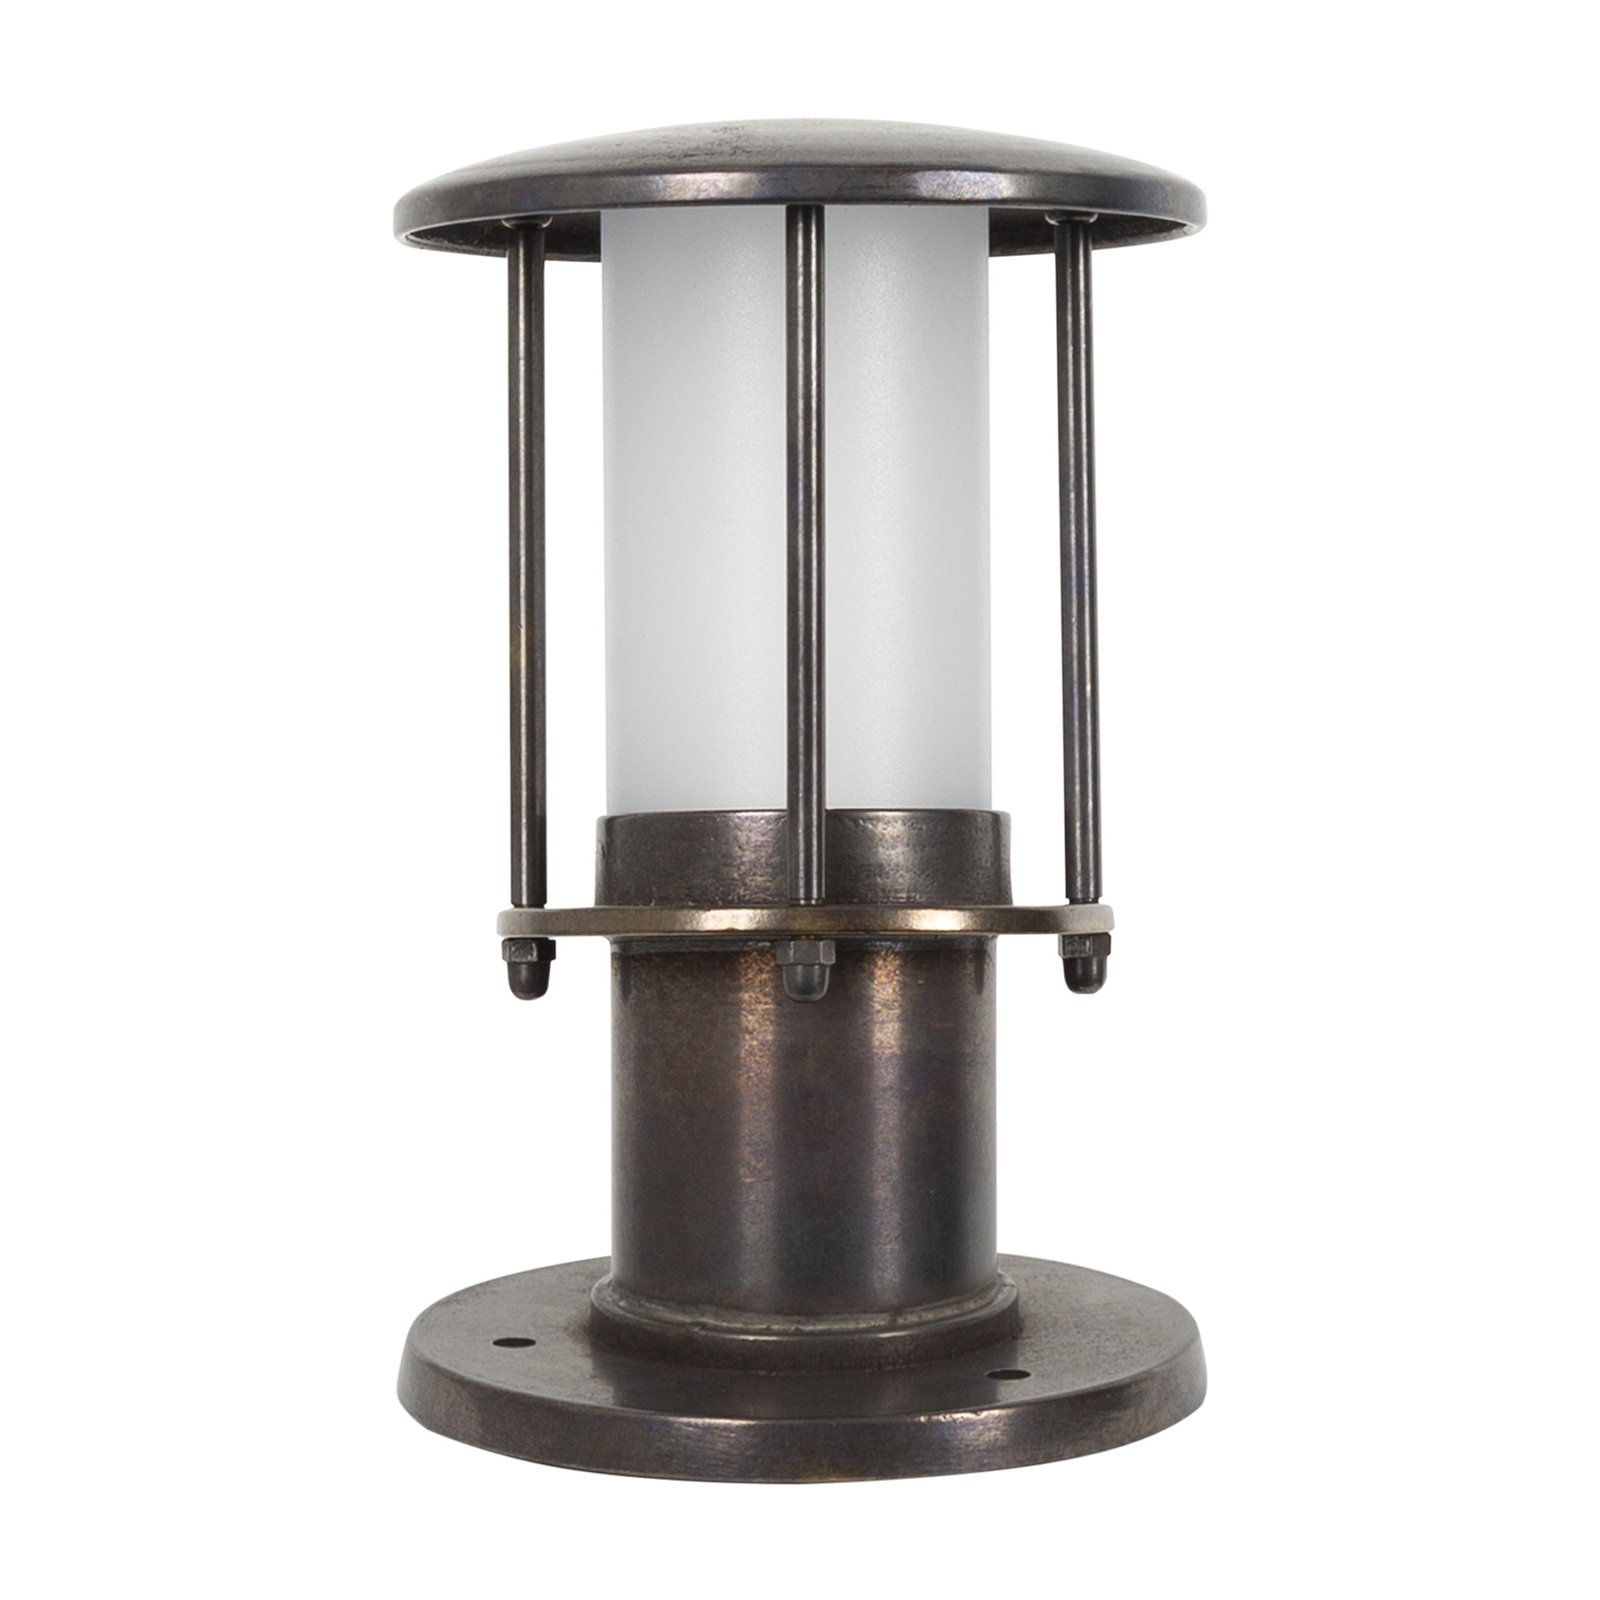 Resident 3 pillar lamp in brass, bronze